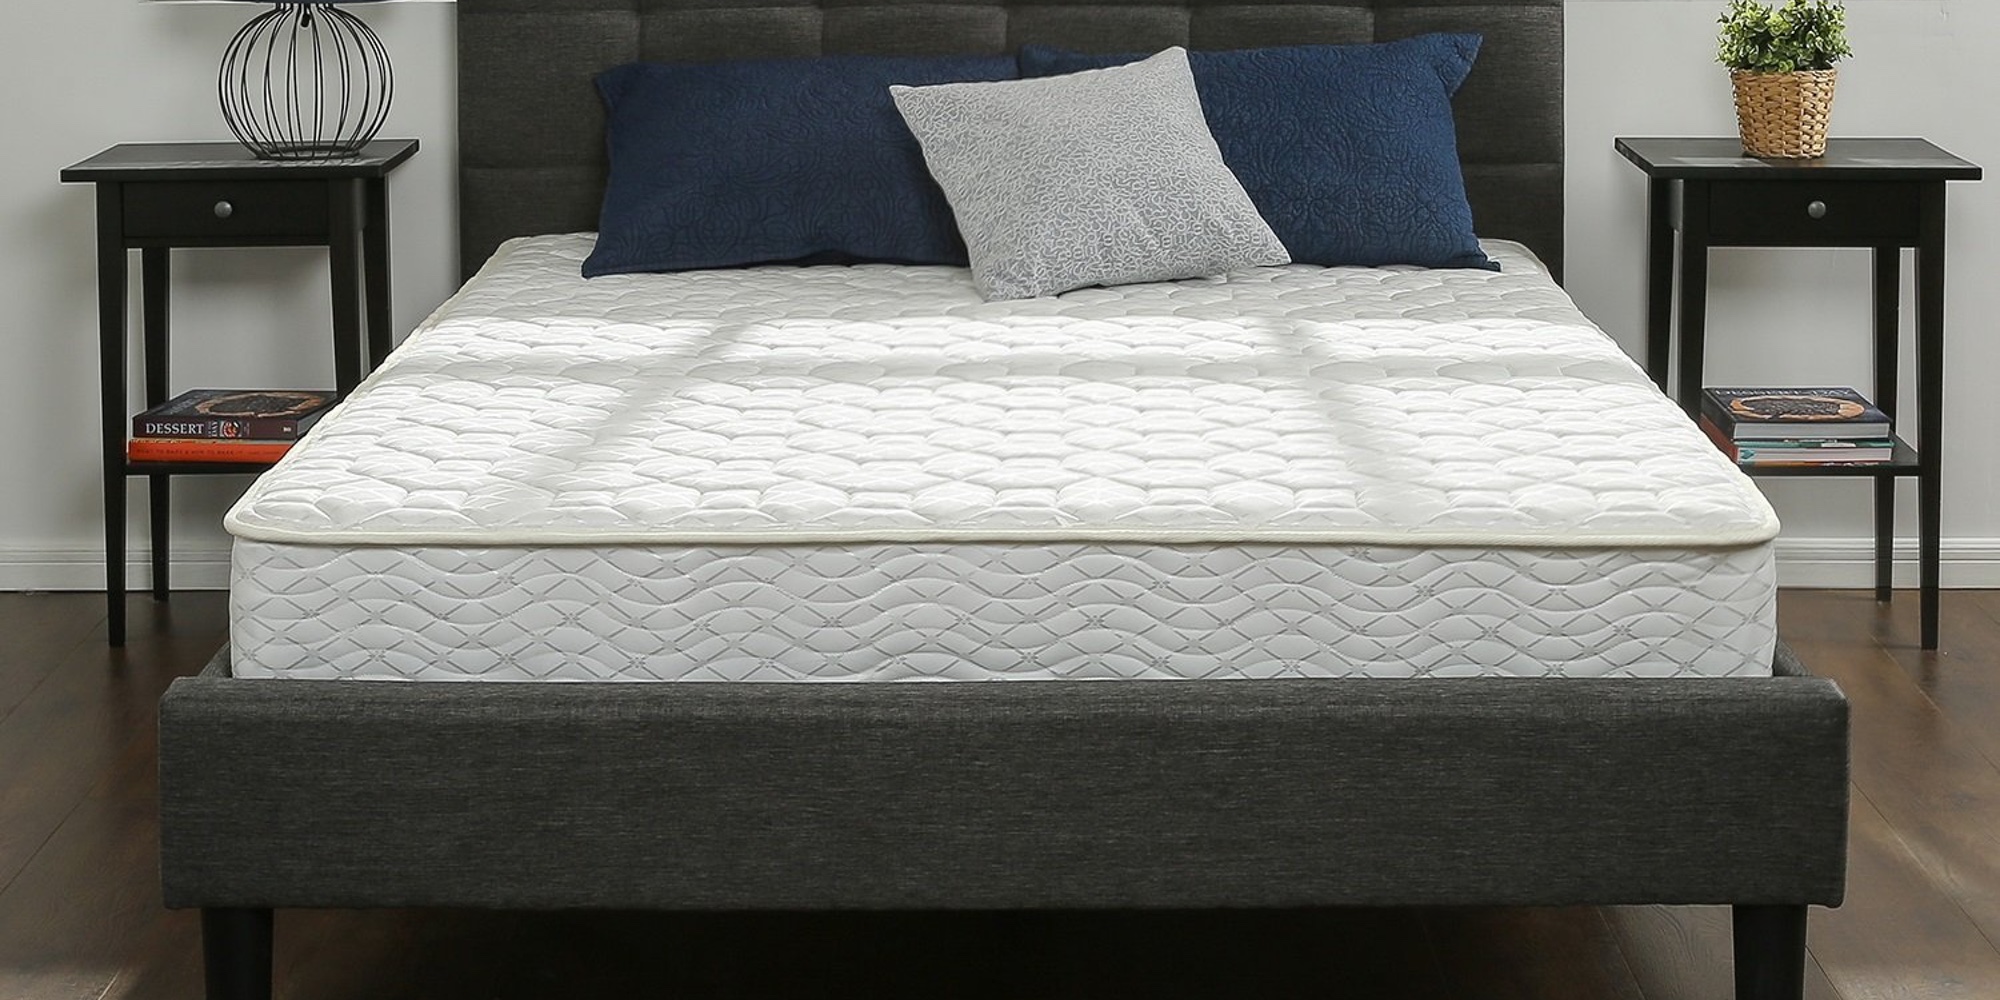 zinus foam and spring mattress